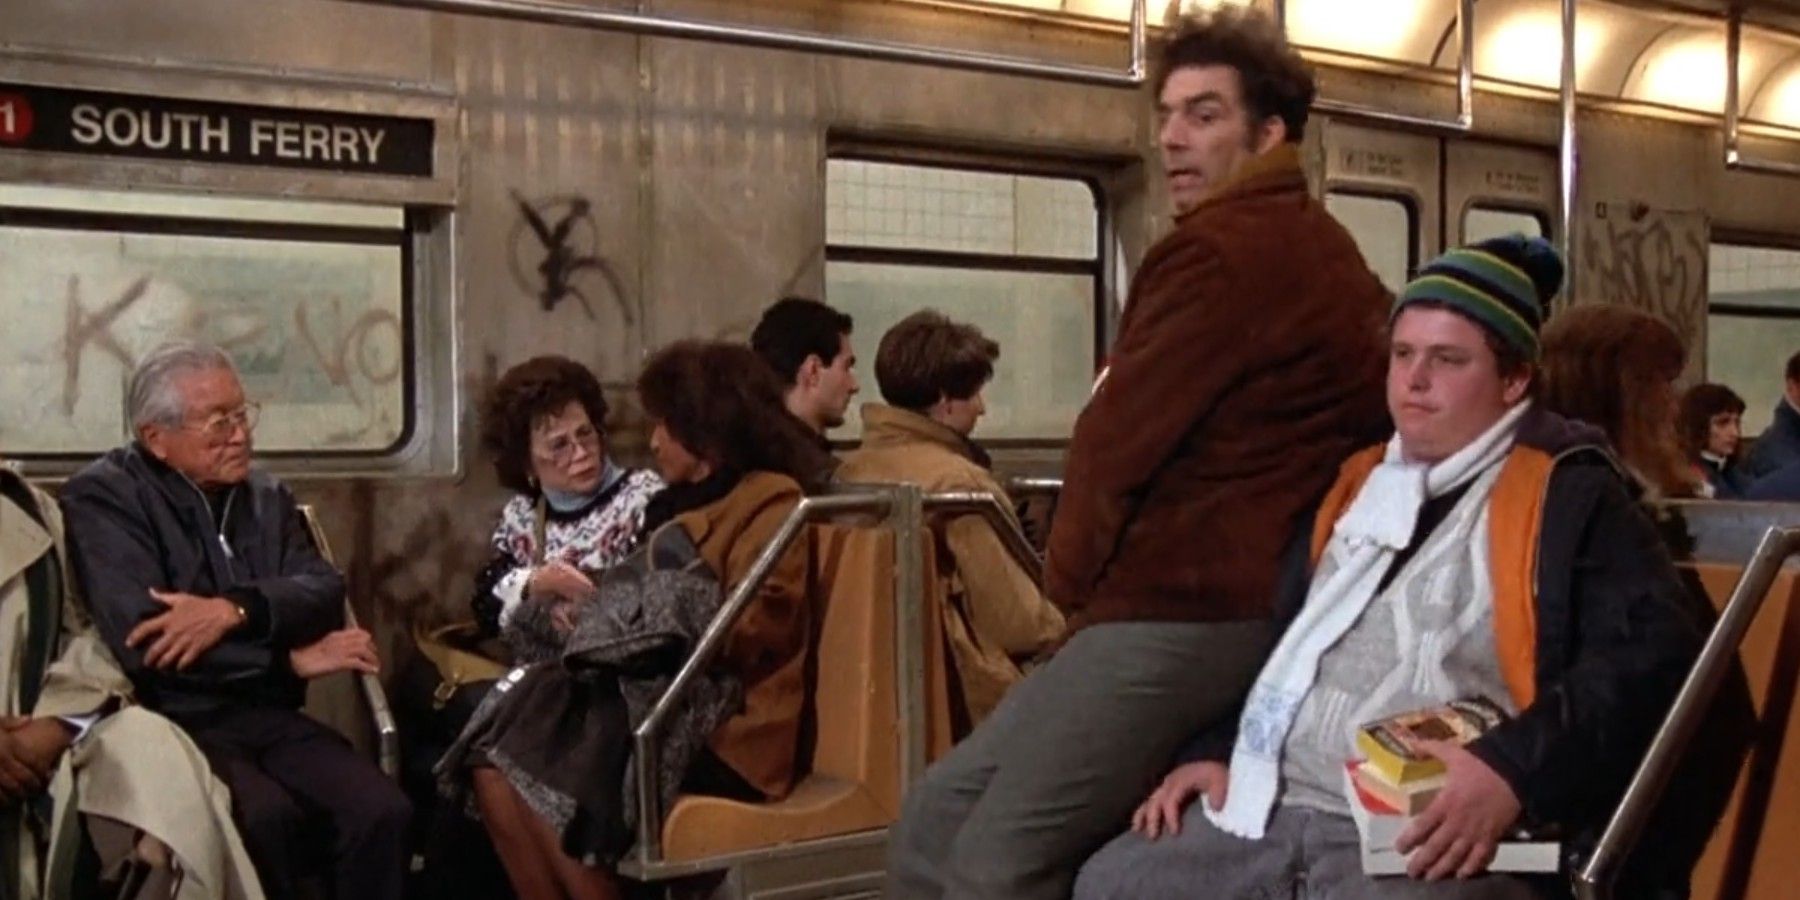 Seinfeld  Calvin Klein steals Kramer's idea then use him as model 